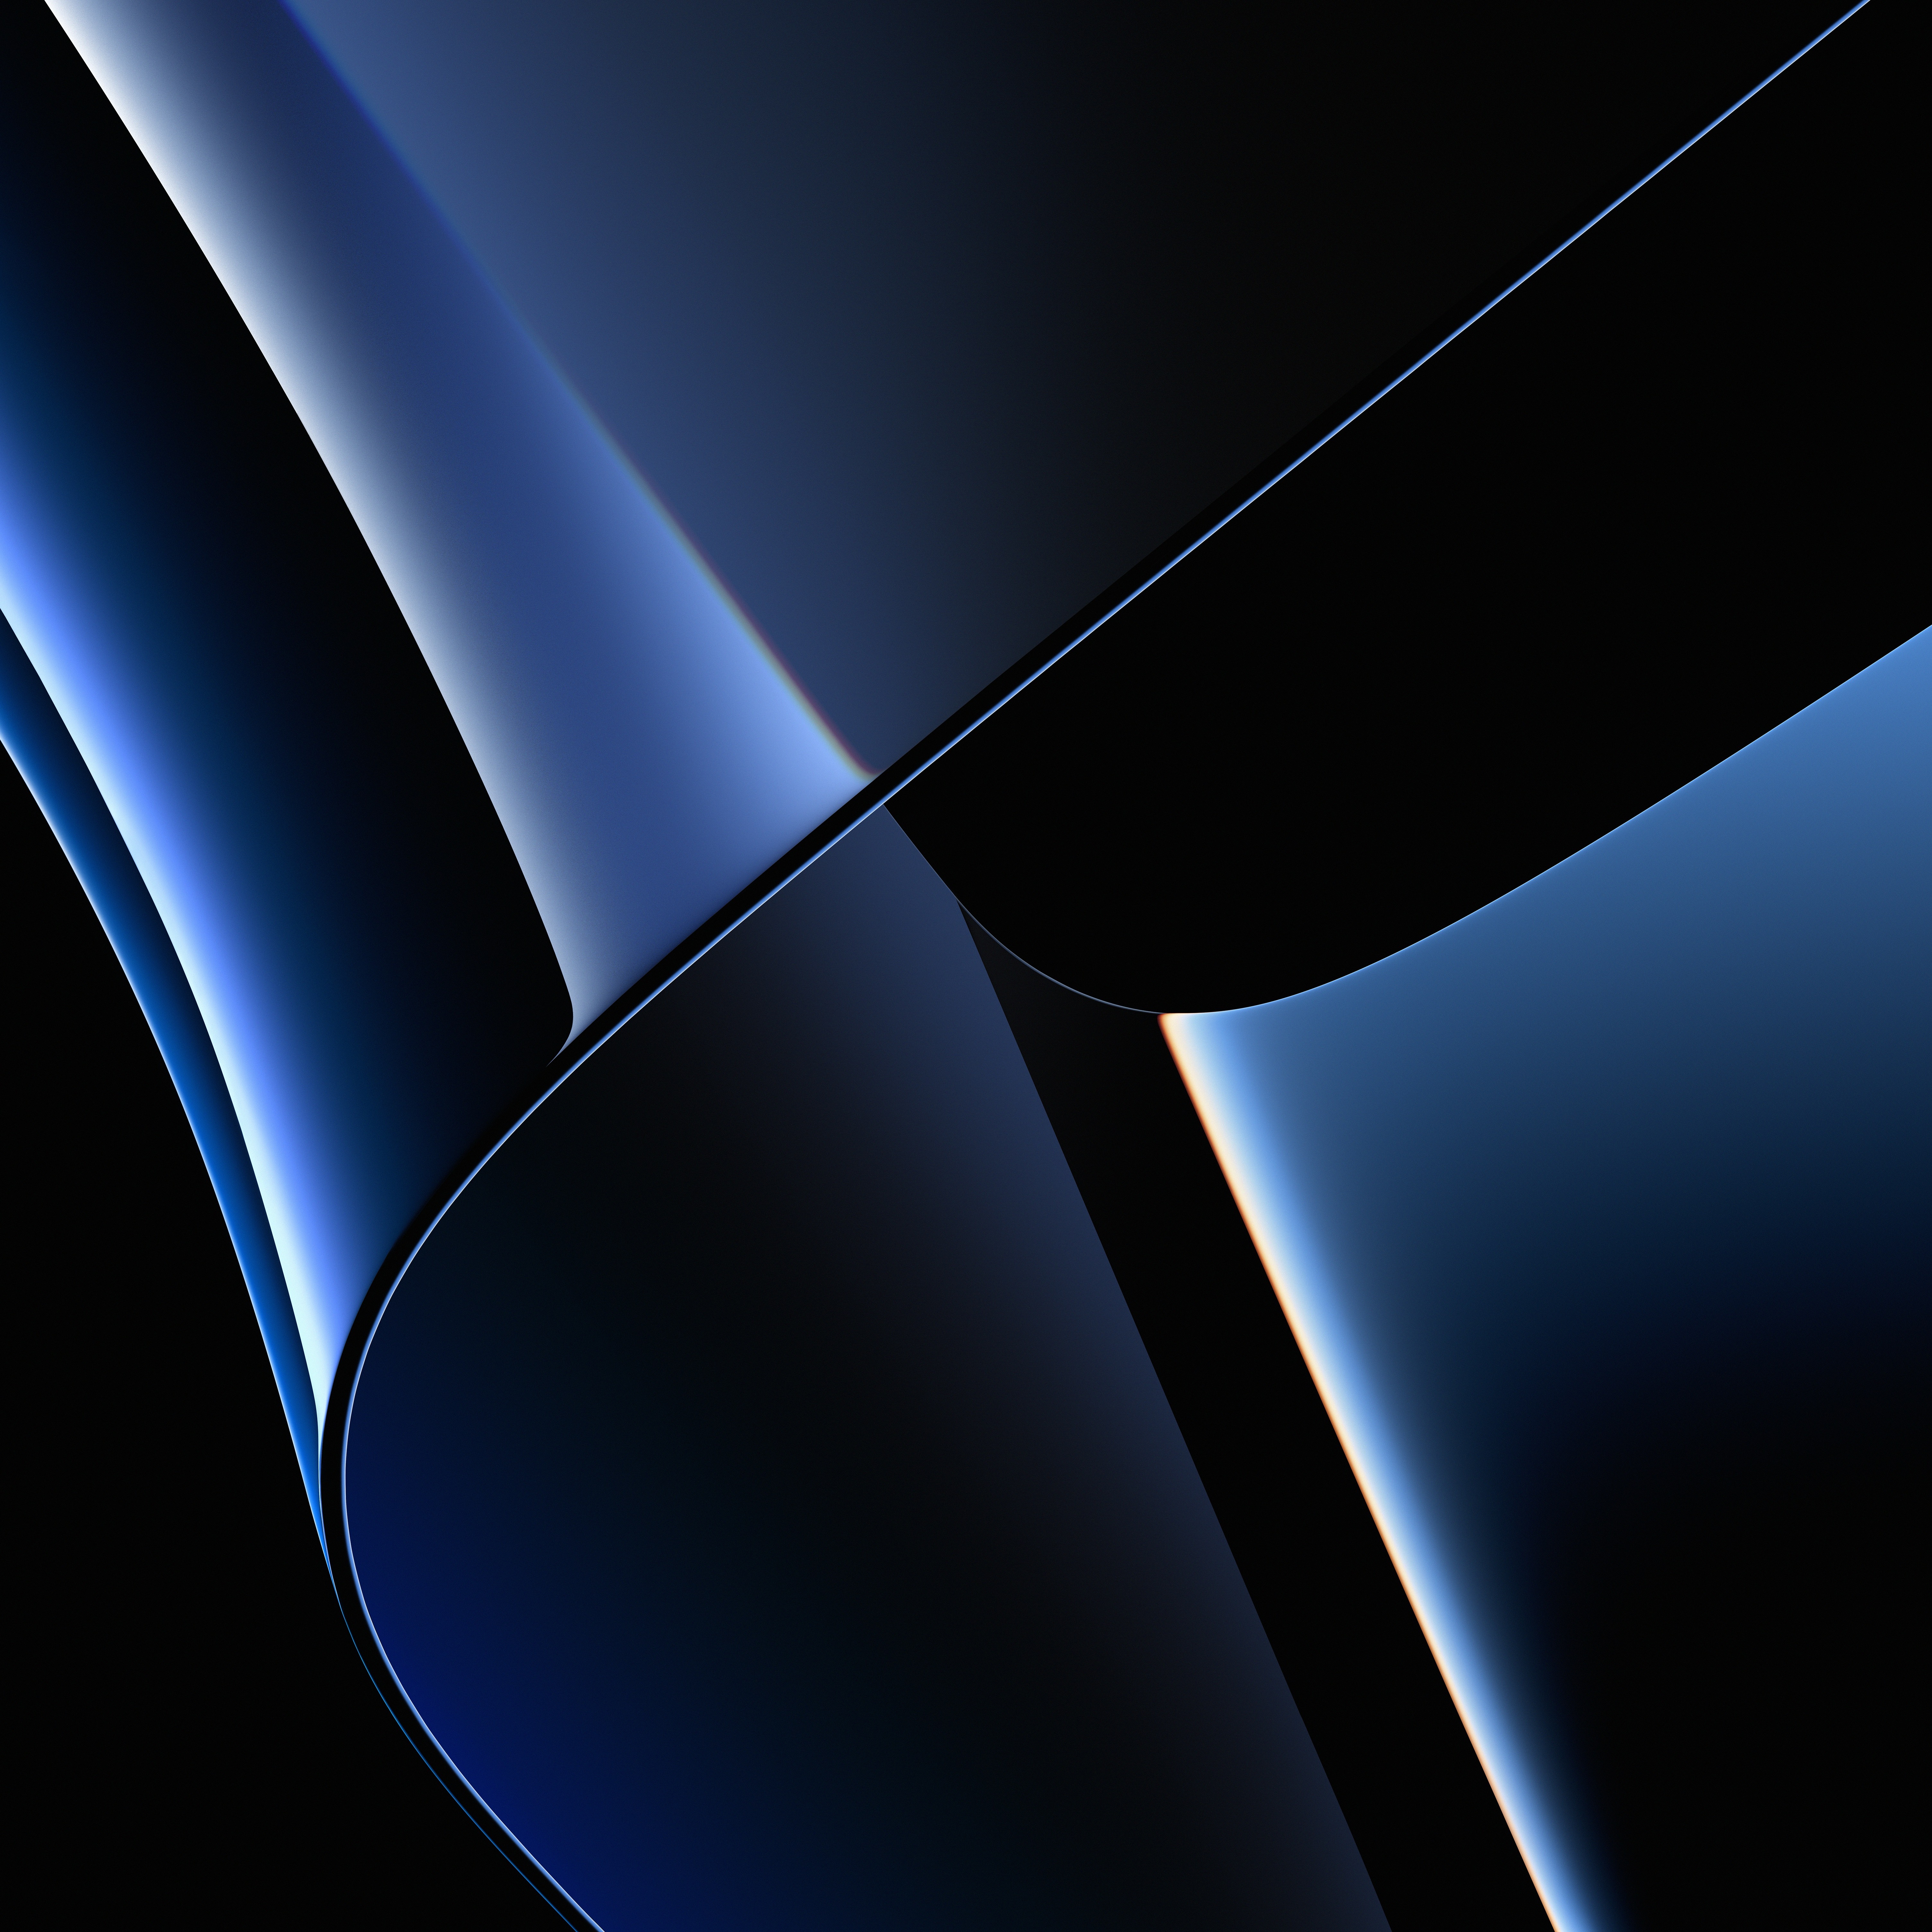 New 2021 MacBook Pro (Chroma Blu Dark) Stock Wallpaper In Ultra HD